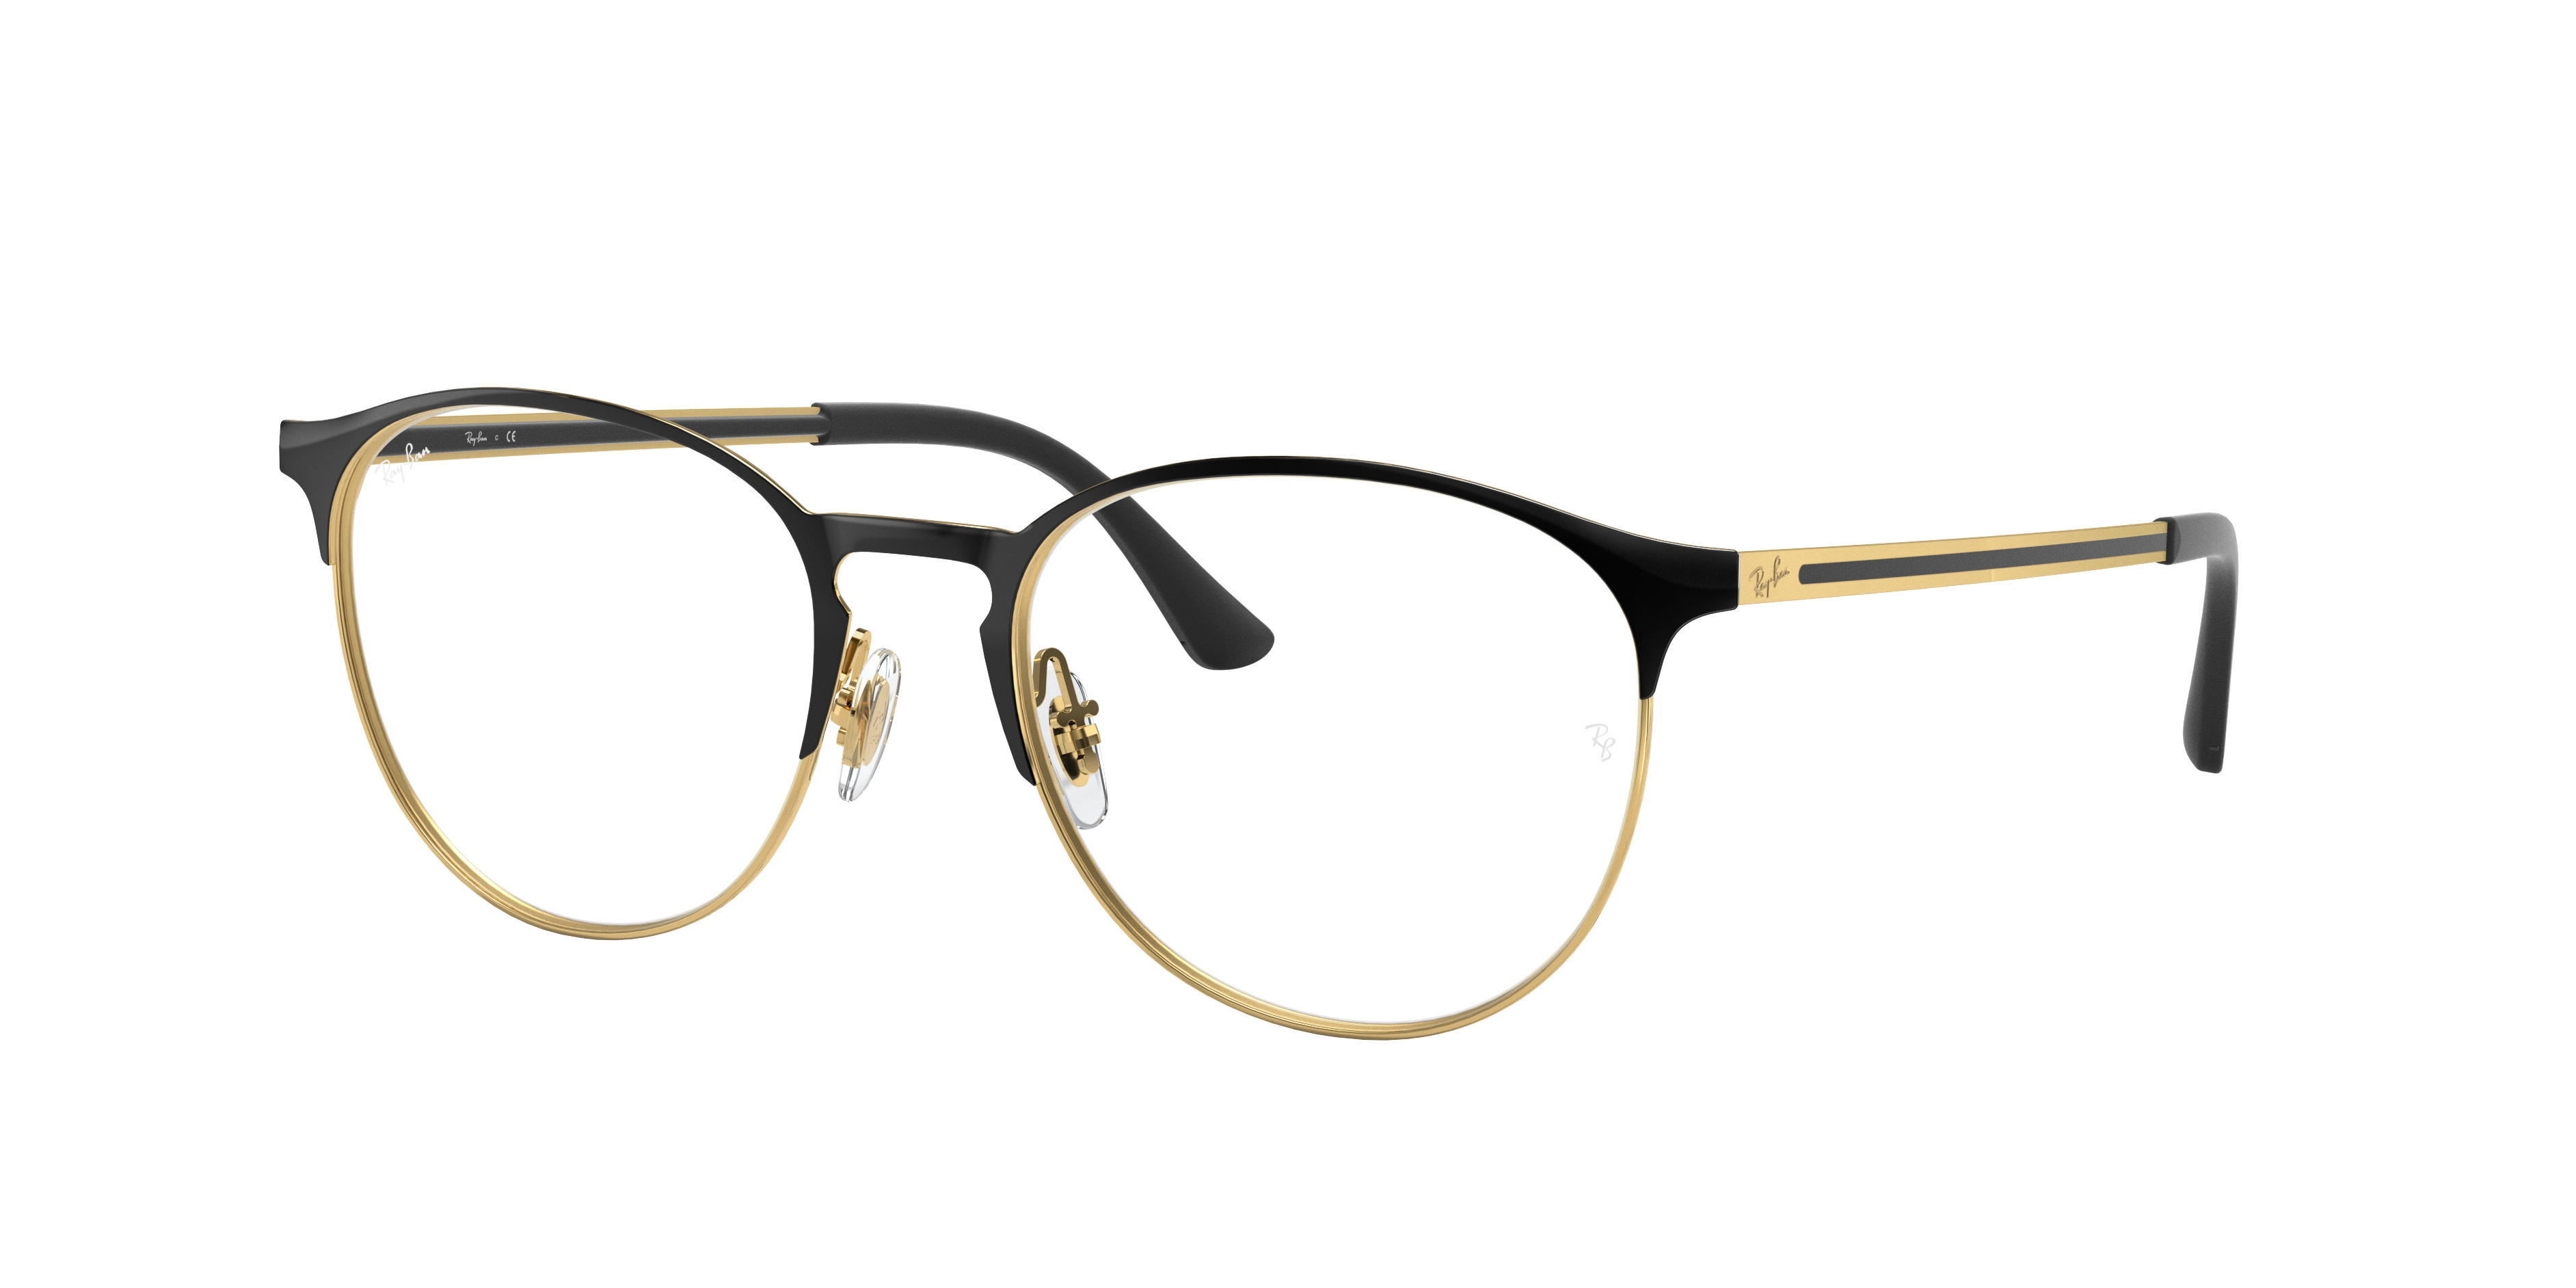 Rb6375 Optics Eyeglasses with Black On Gold Frame | Ray-Ban®